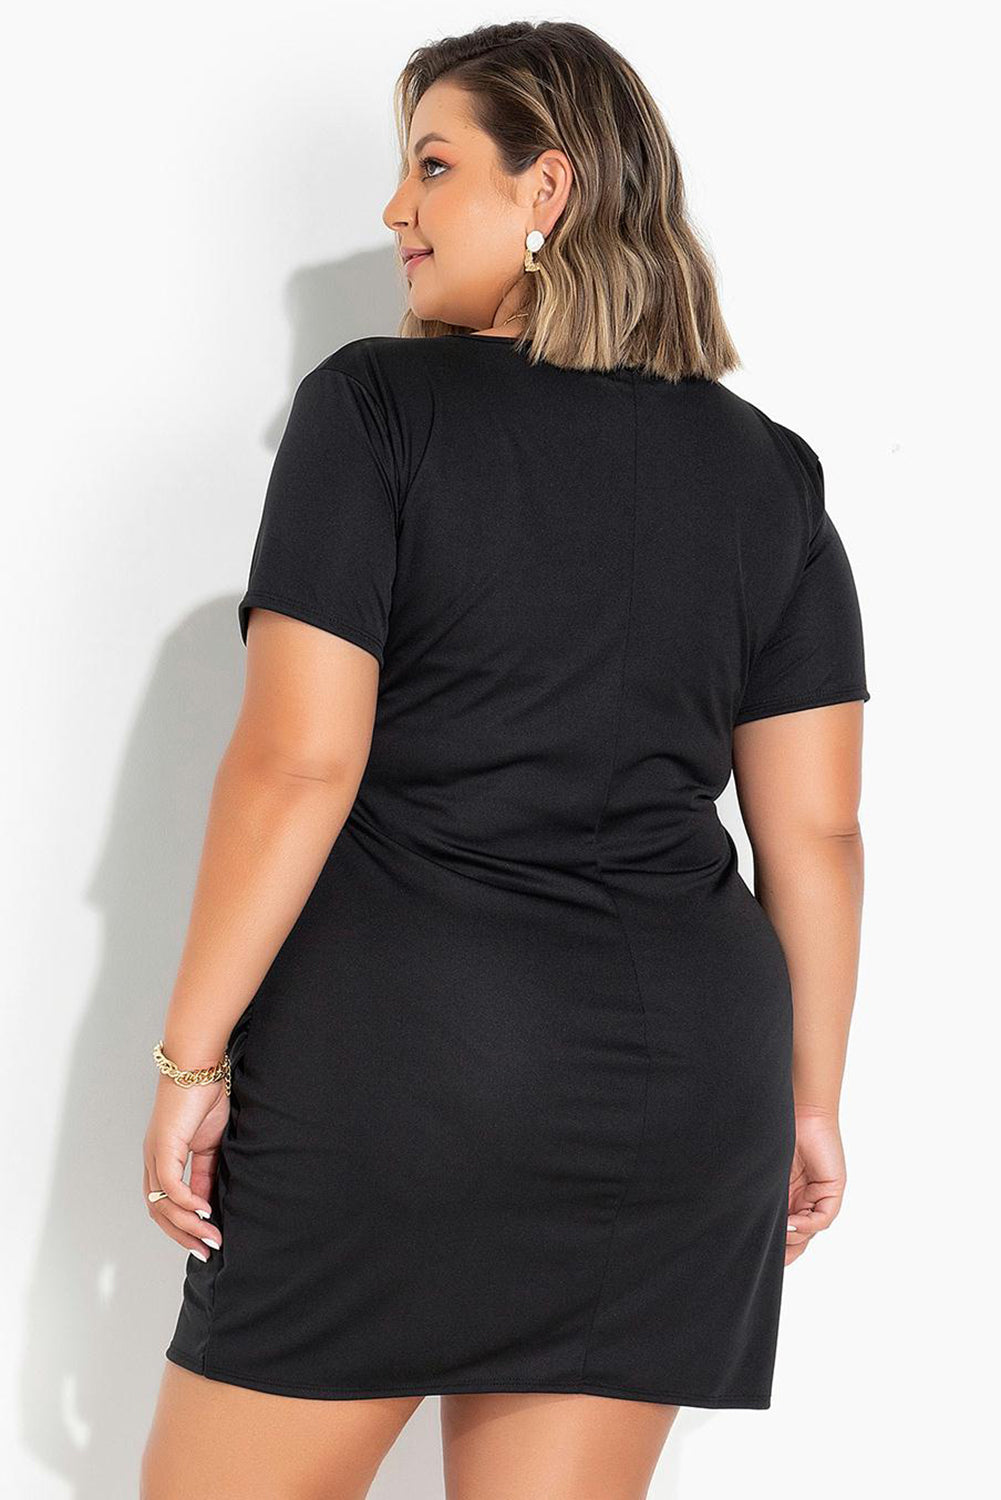 Black Wrap Ruched Short Sleeves Plus Size Mini Dress Plus Size Dresses JT's Designer Fashion